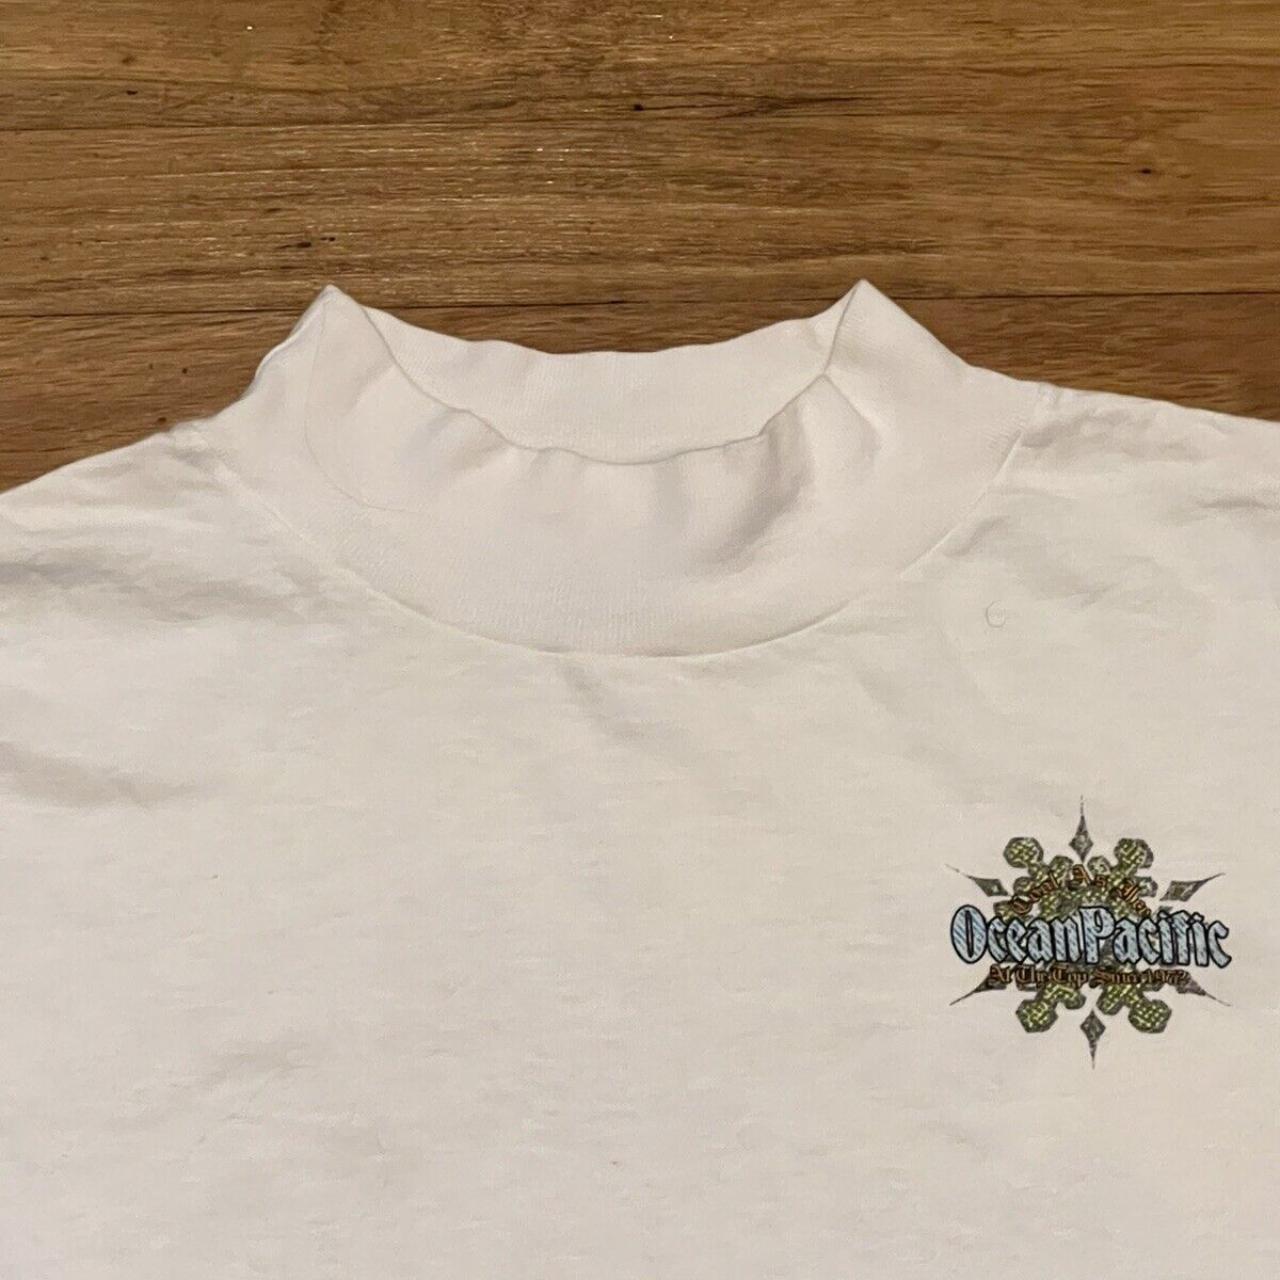 Ocean Pacific Men's White T-shirt (3)